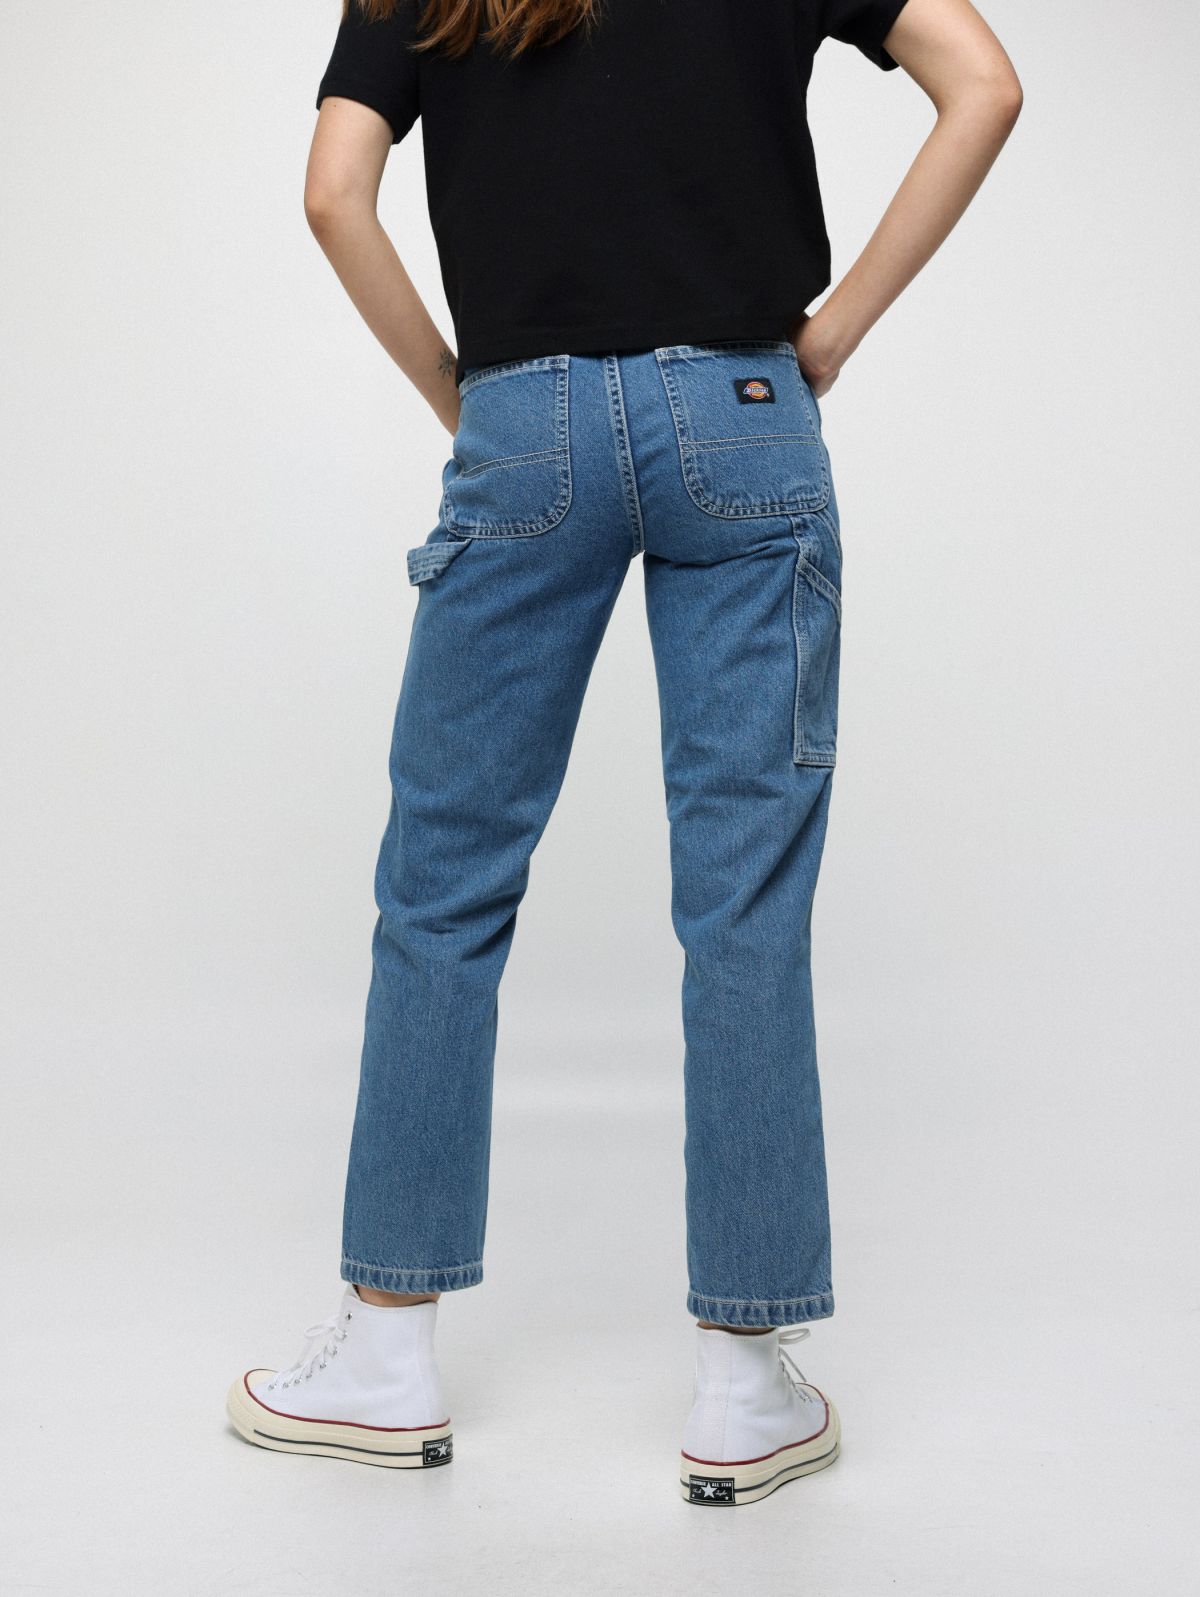  מכנסי ג'ינס בגזרה ישרה ELLENDALE של DICKIES